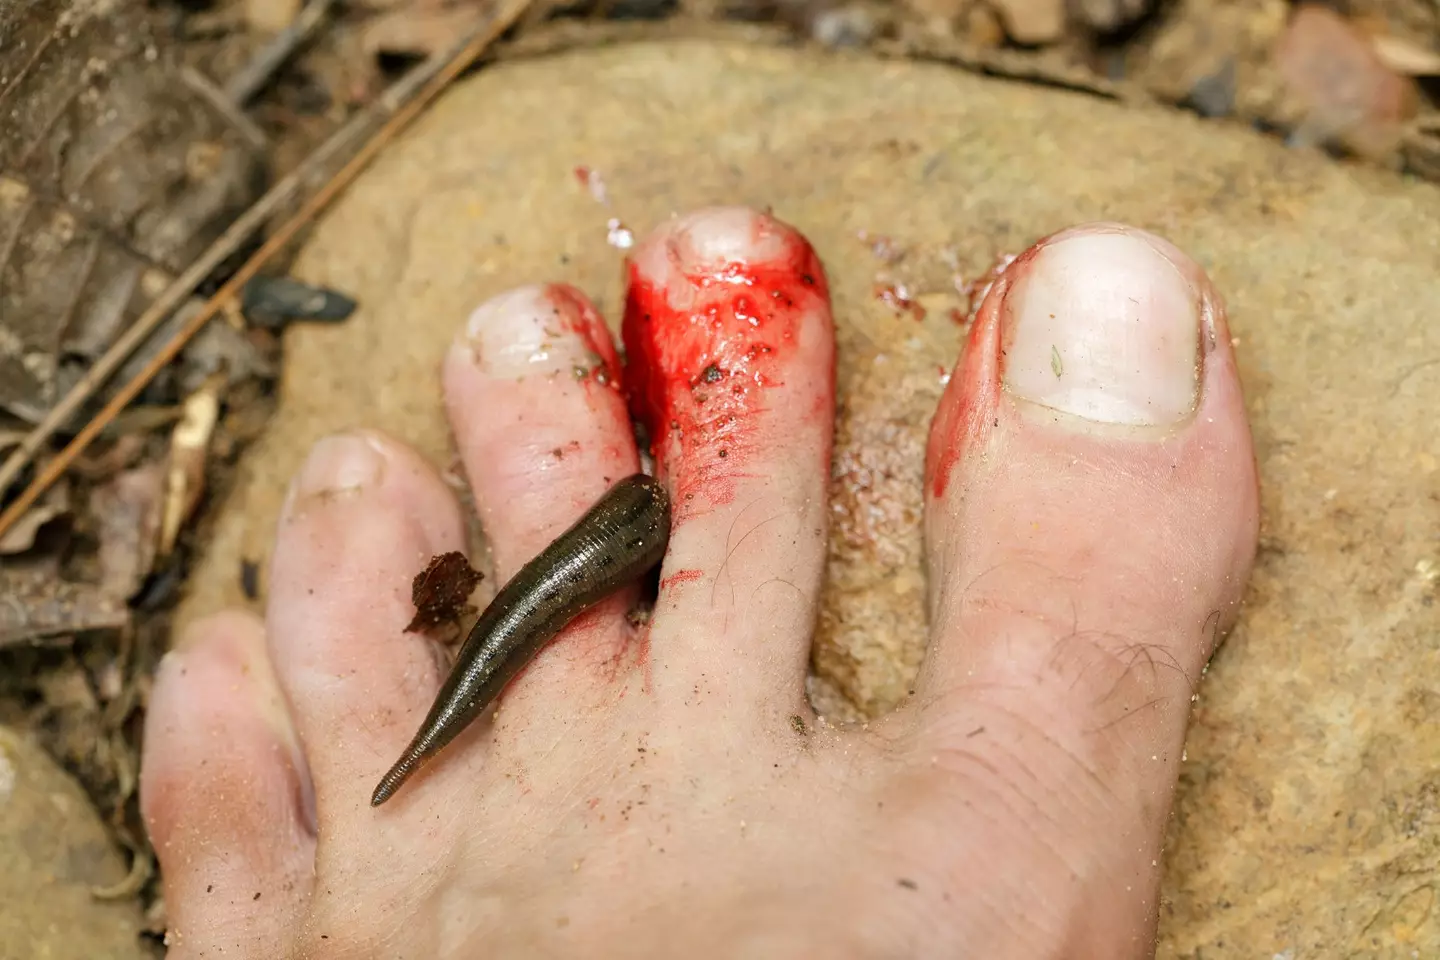 Leeches aren’t dangerous, but hosts rarely feel their bites.